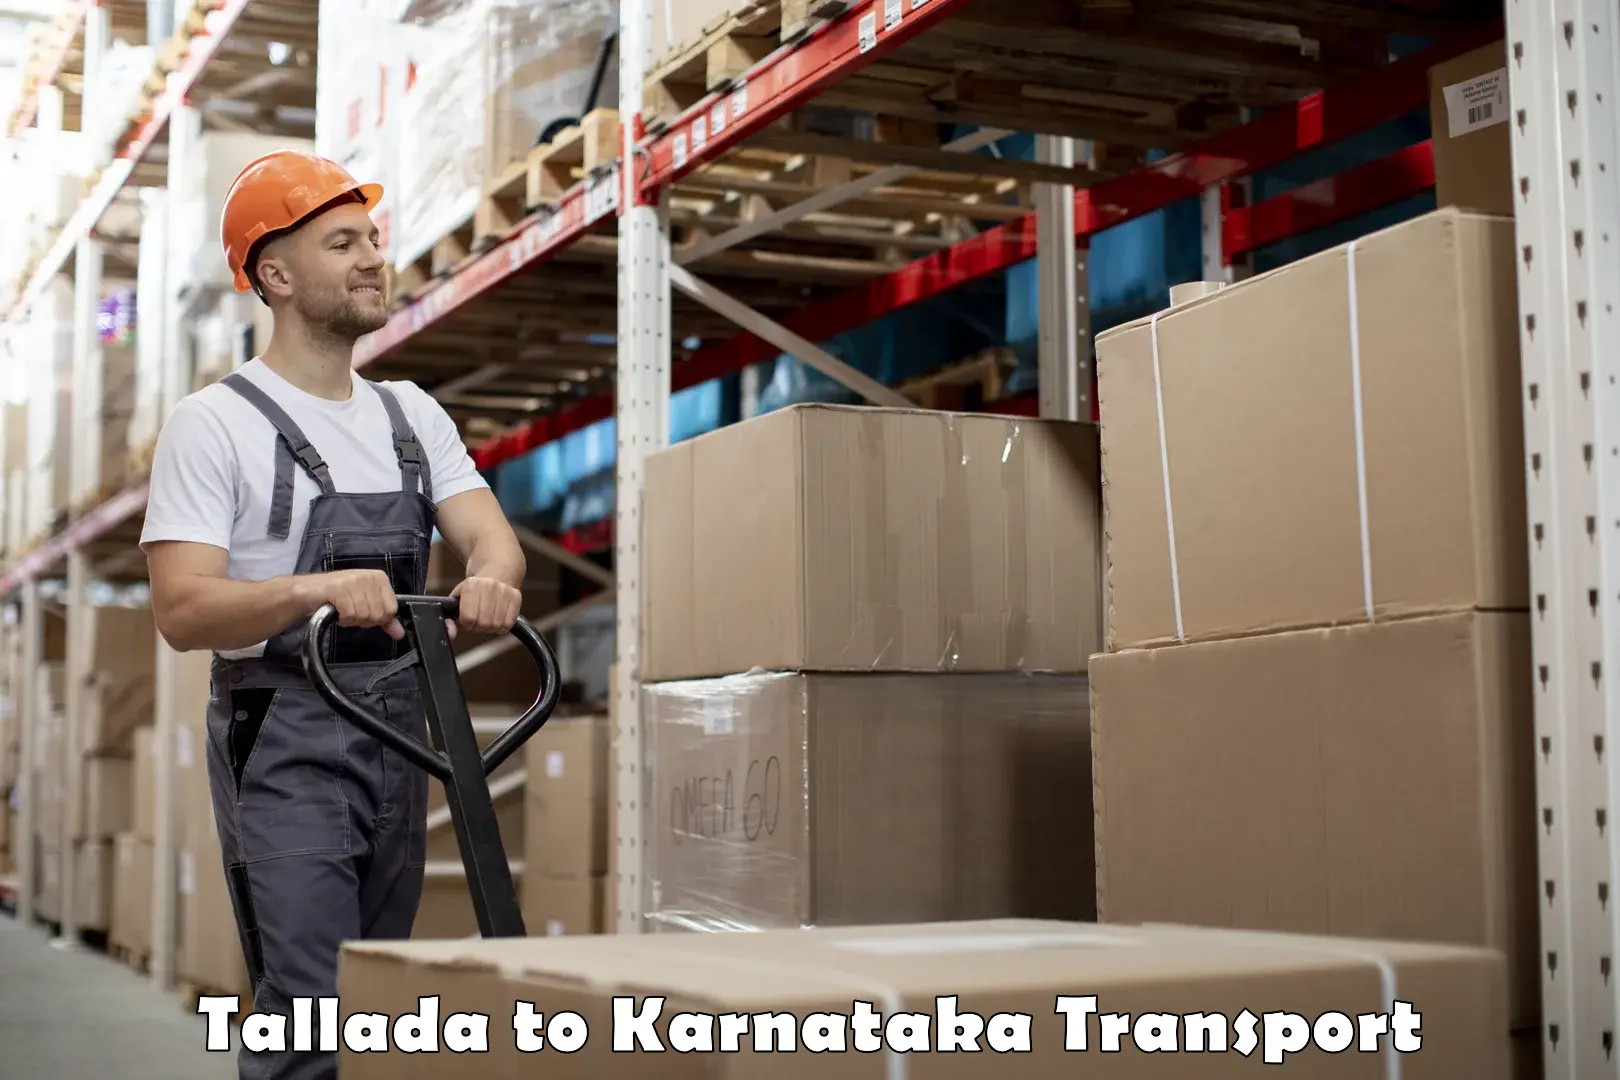 Cargo train transport services Tallada to Karnataka